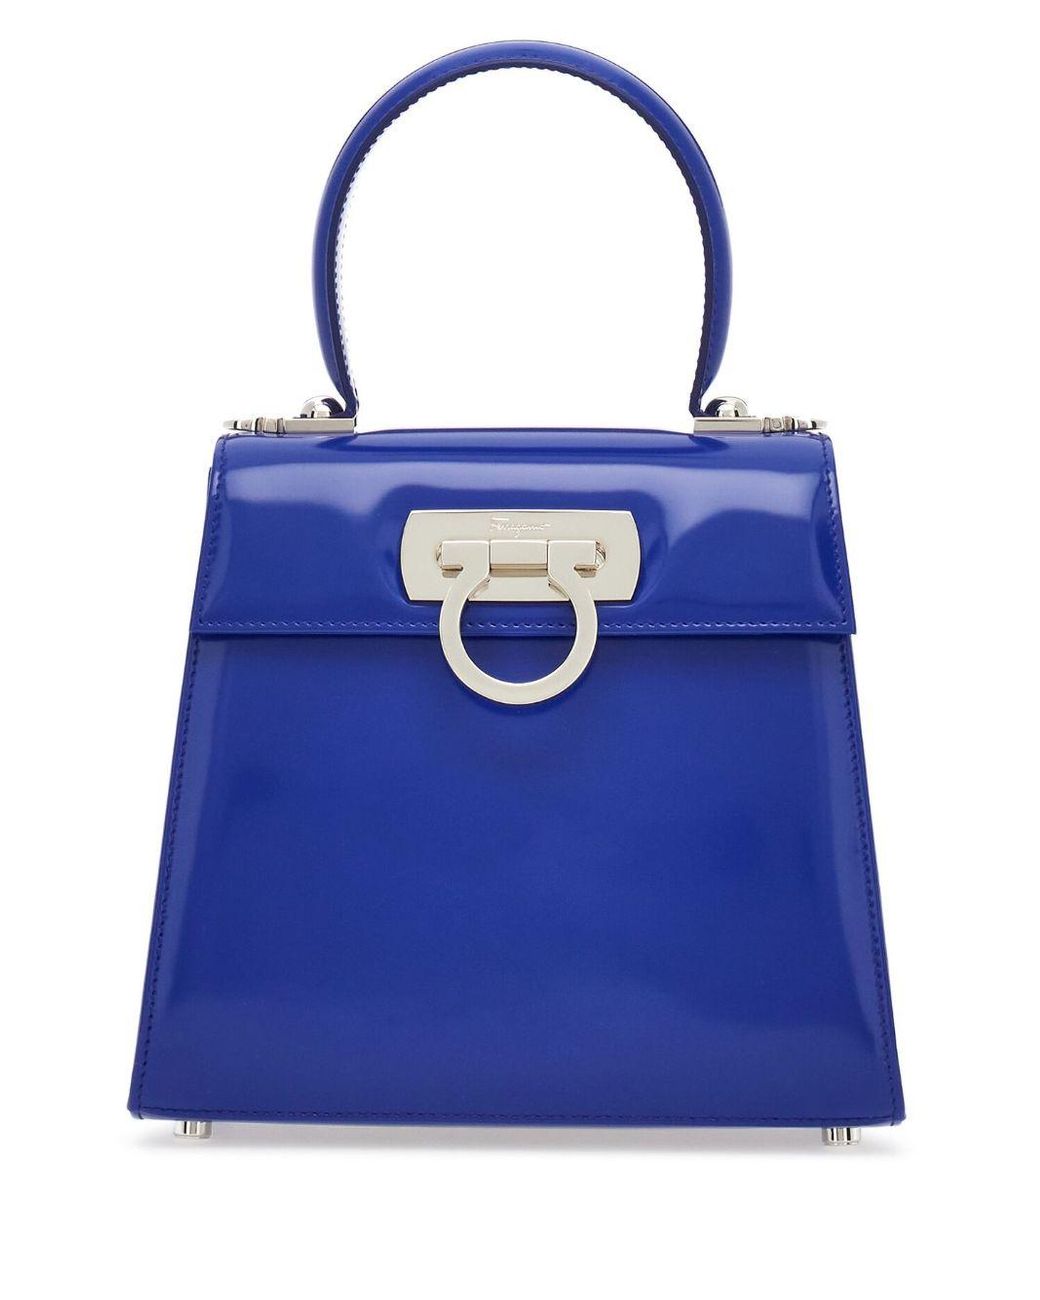 Ferragamo Iconic Top Handle Tote Bag in Blue | Lyst